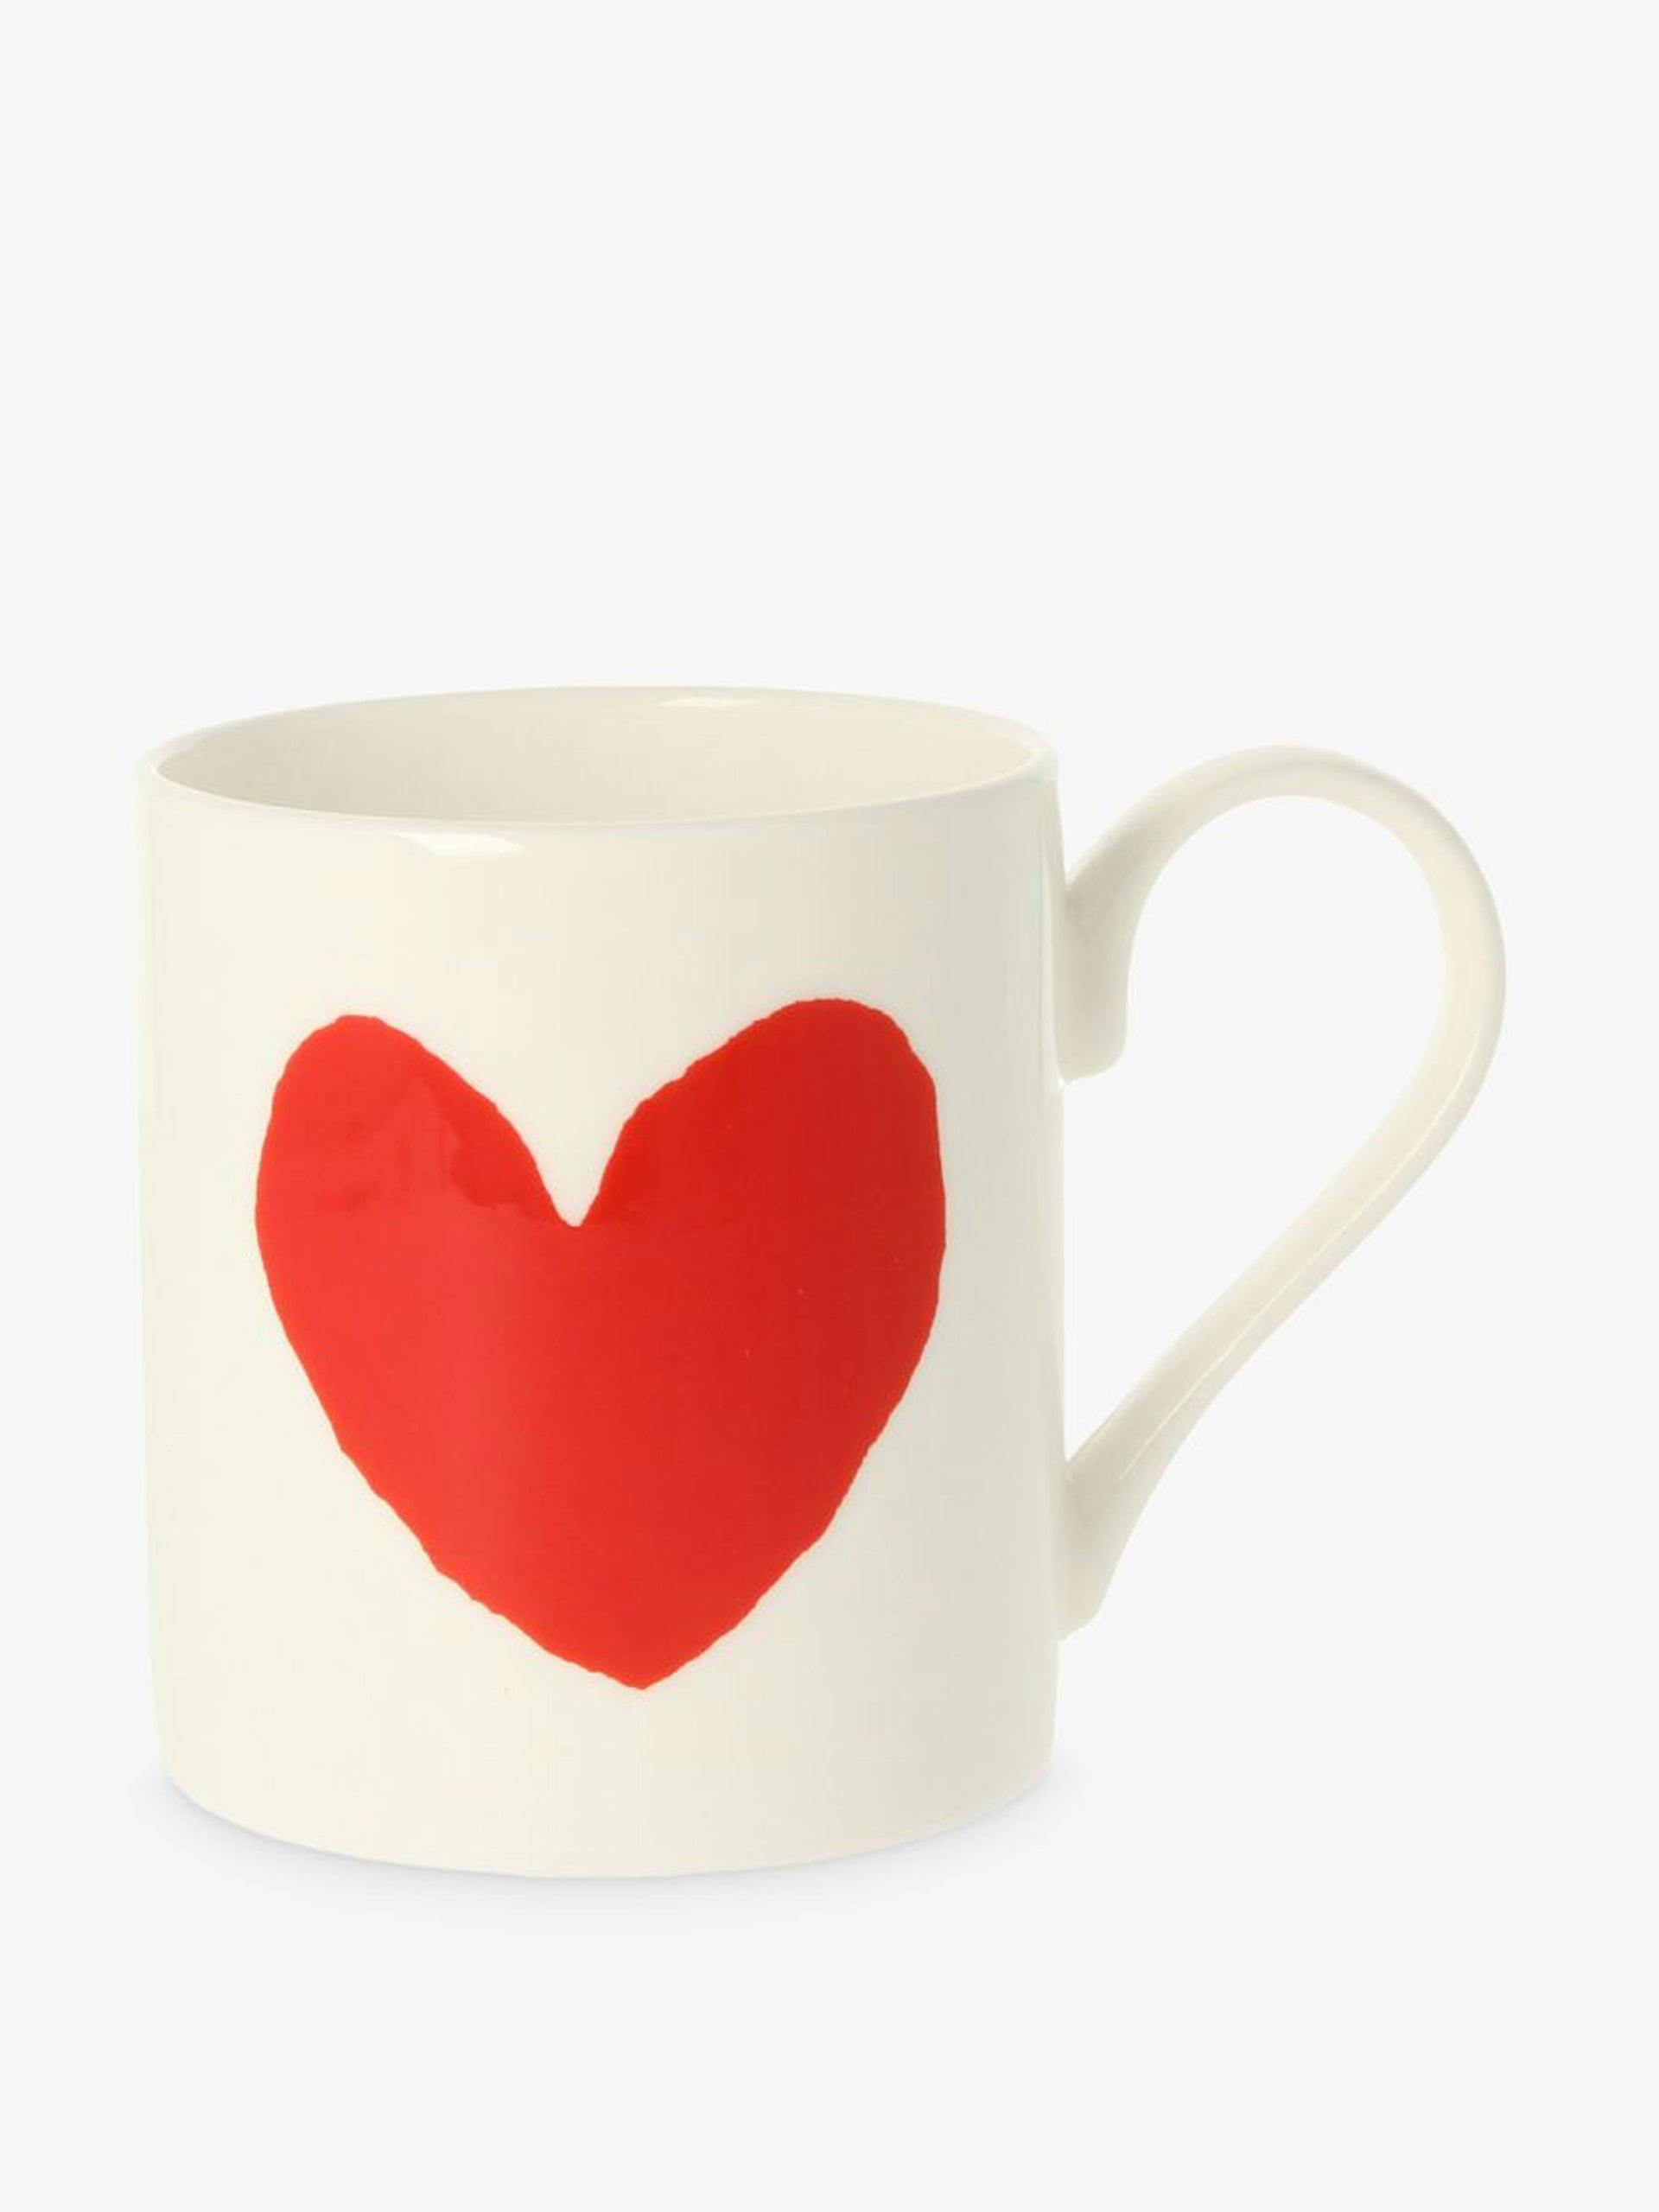 Red heart mug